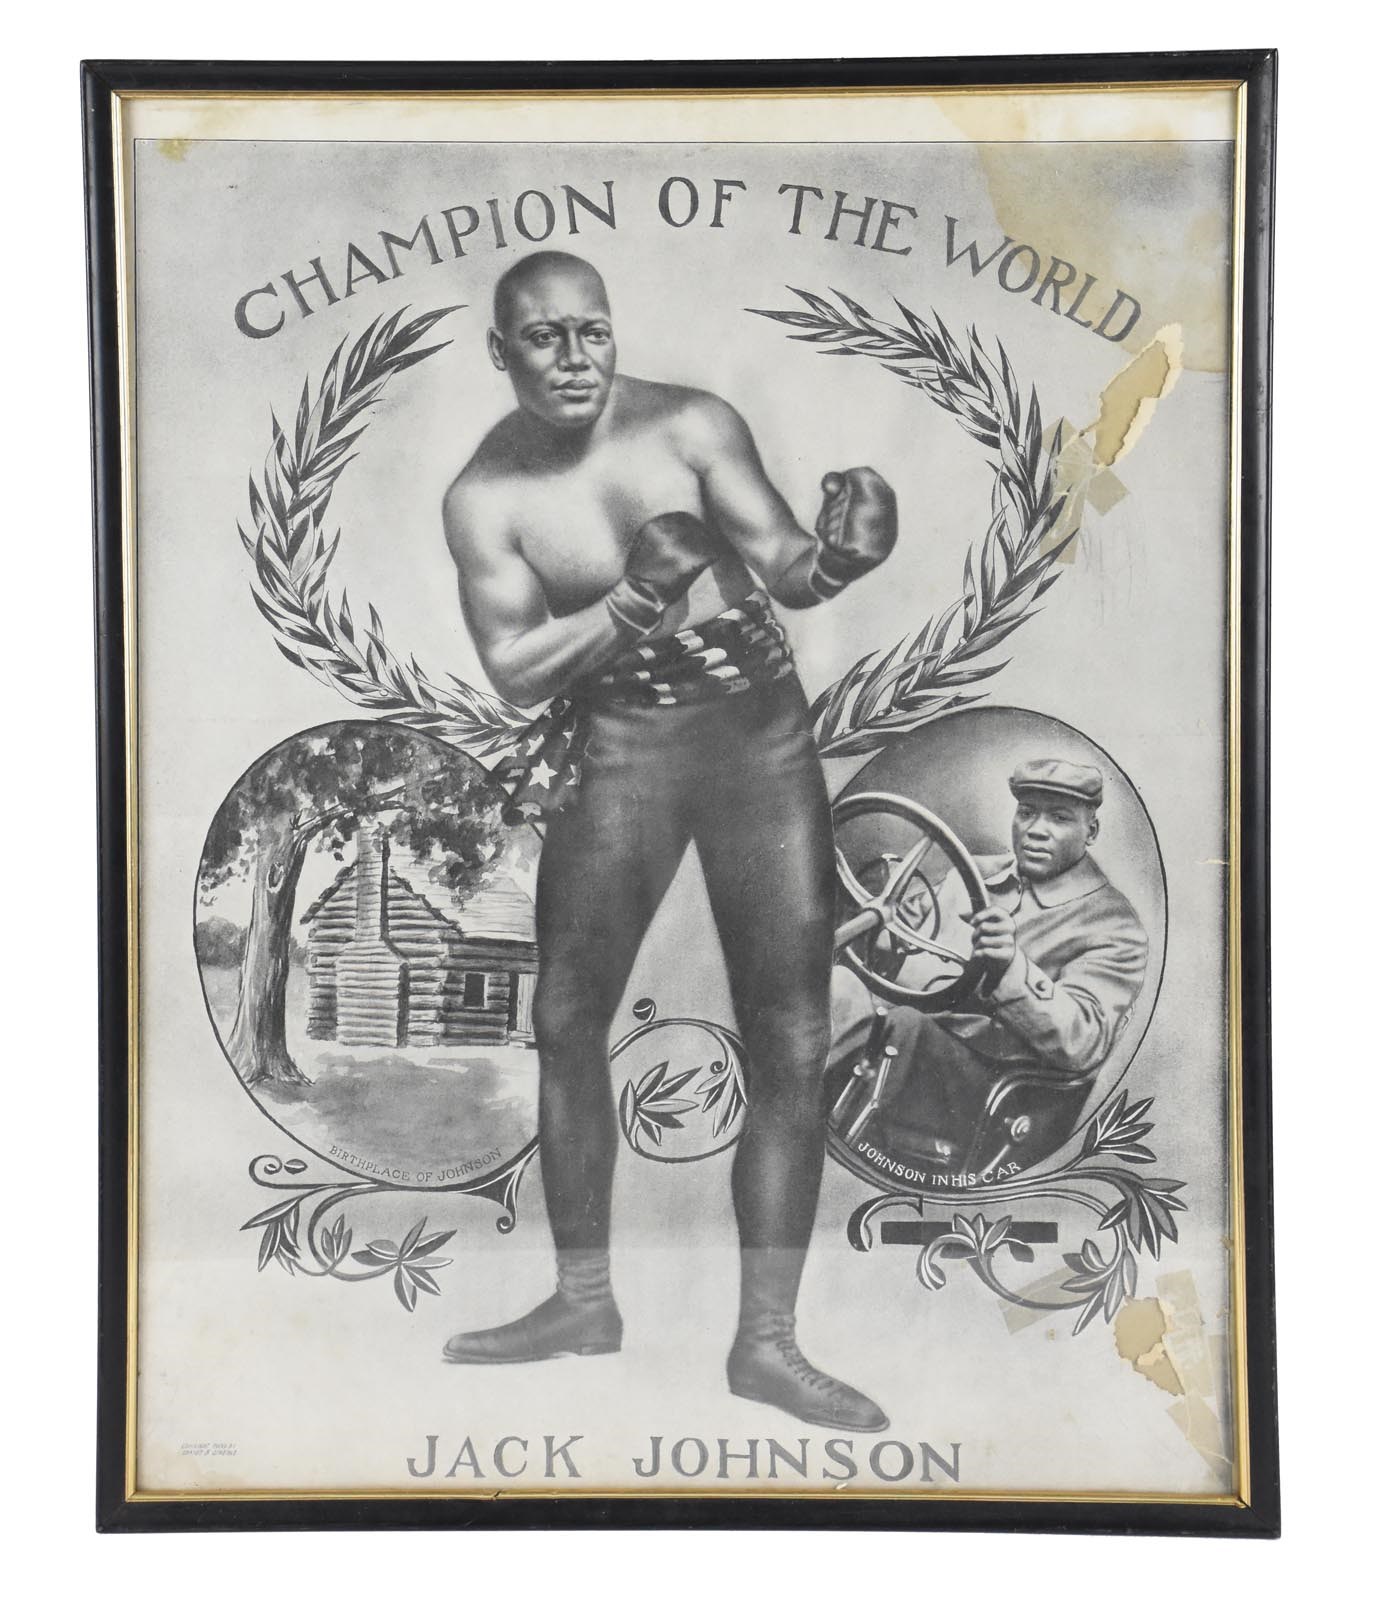 Rare 1909 Jack Johnson Champion of the World Print